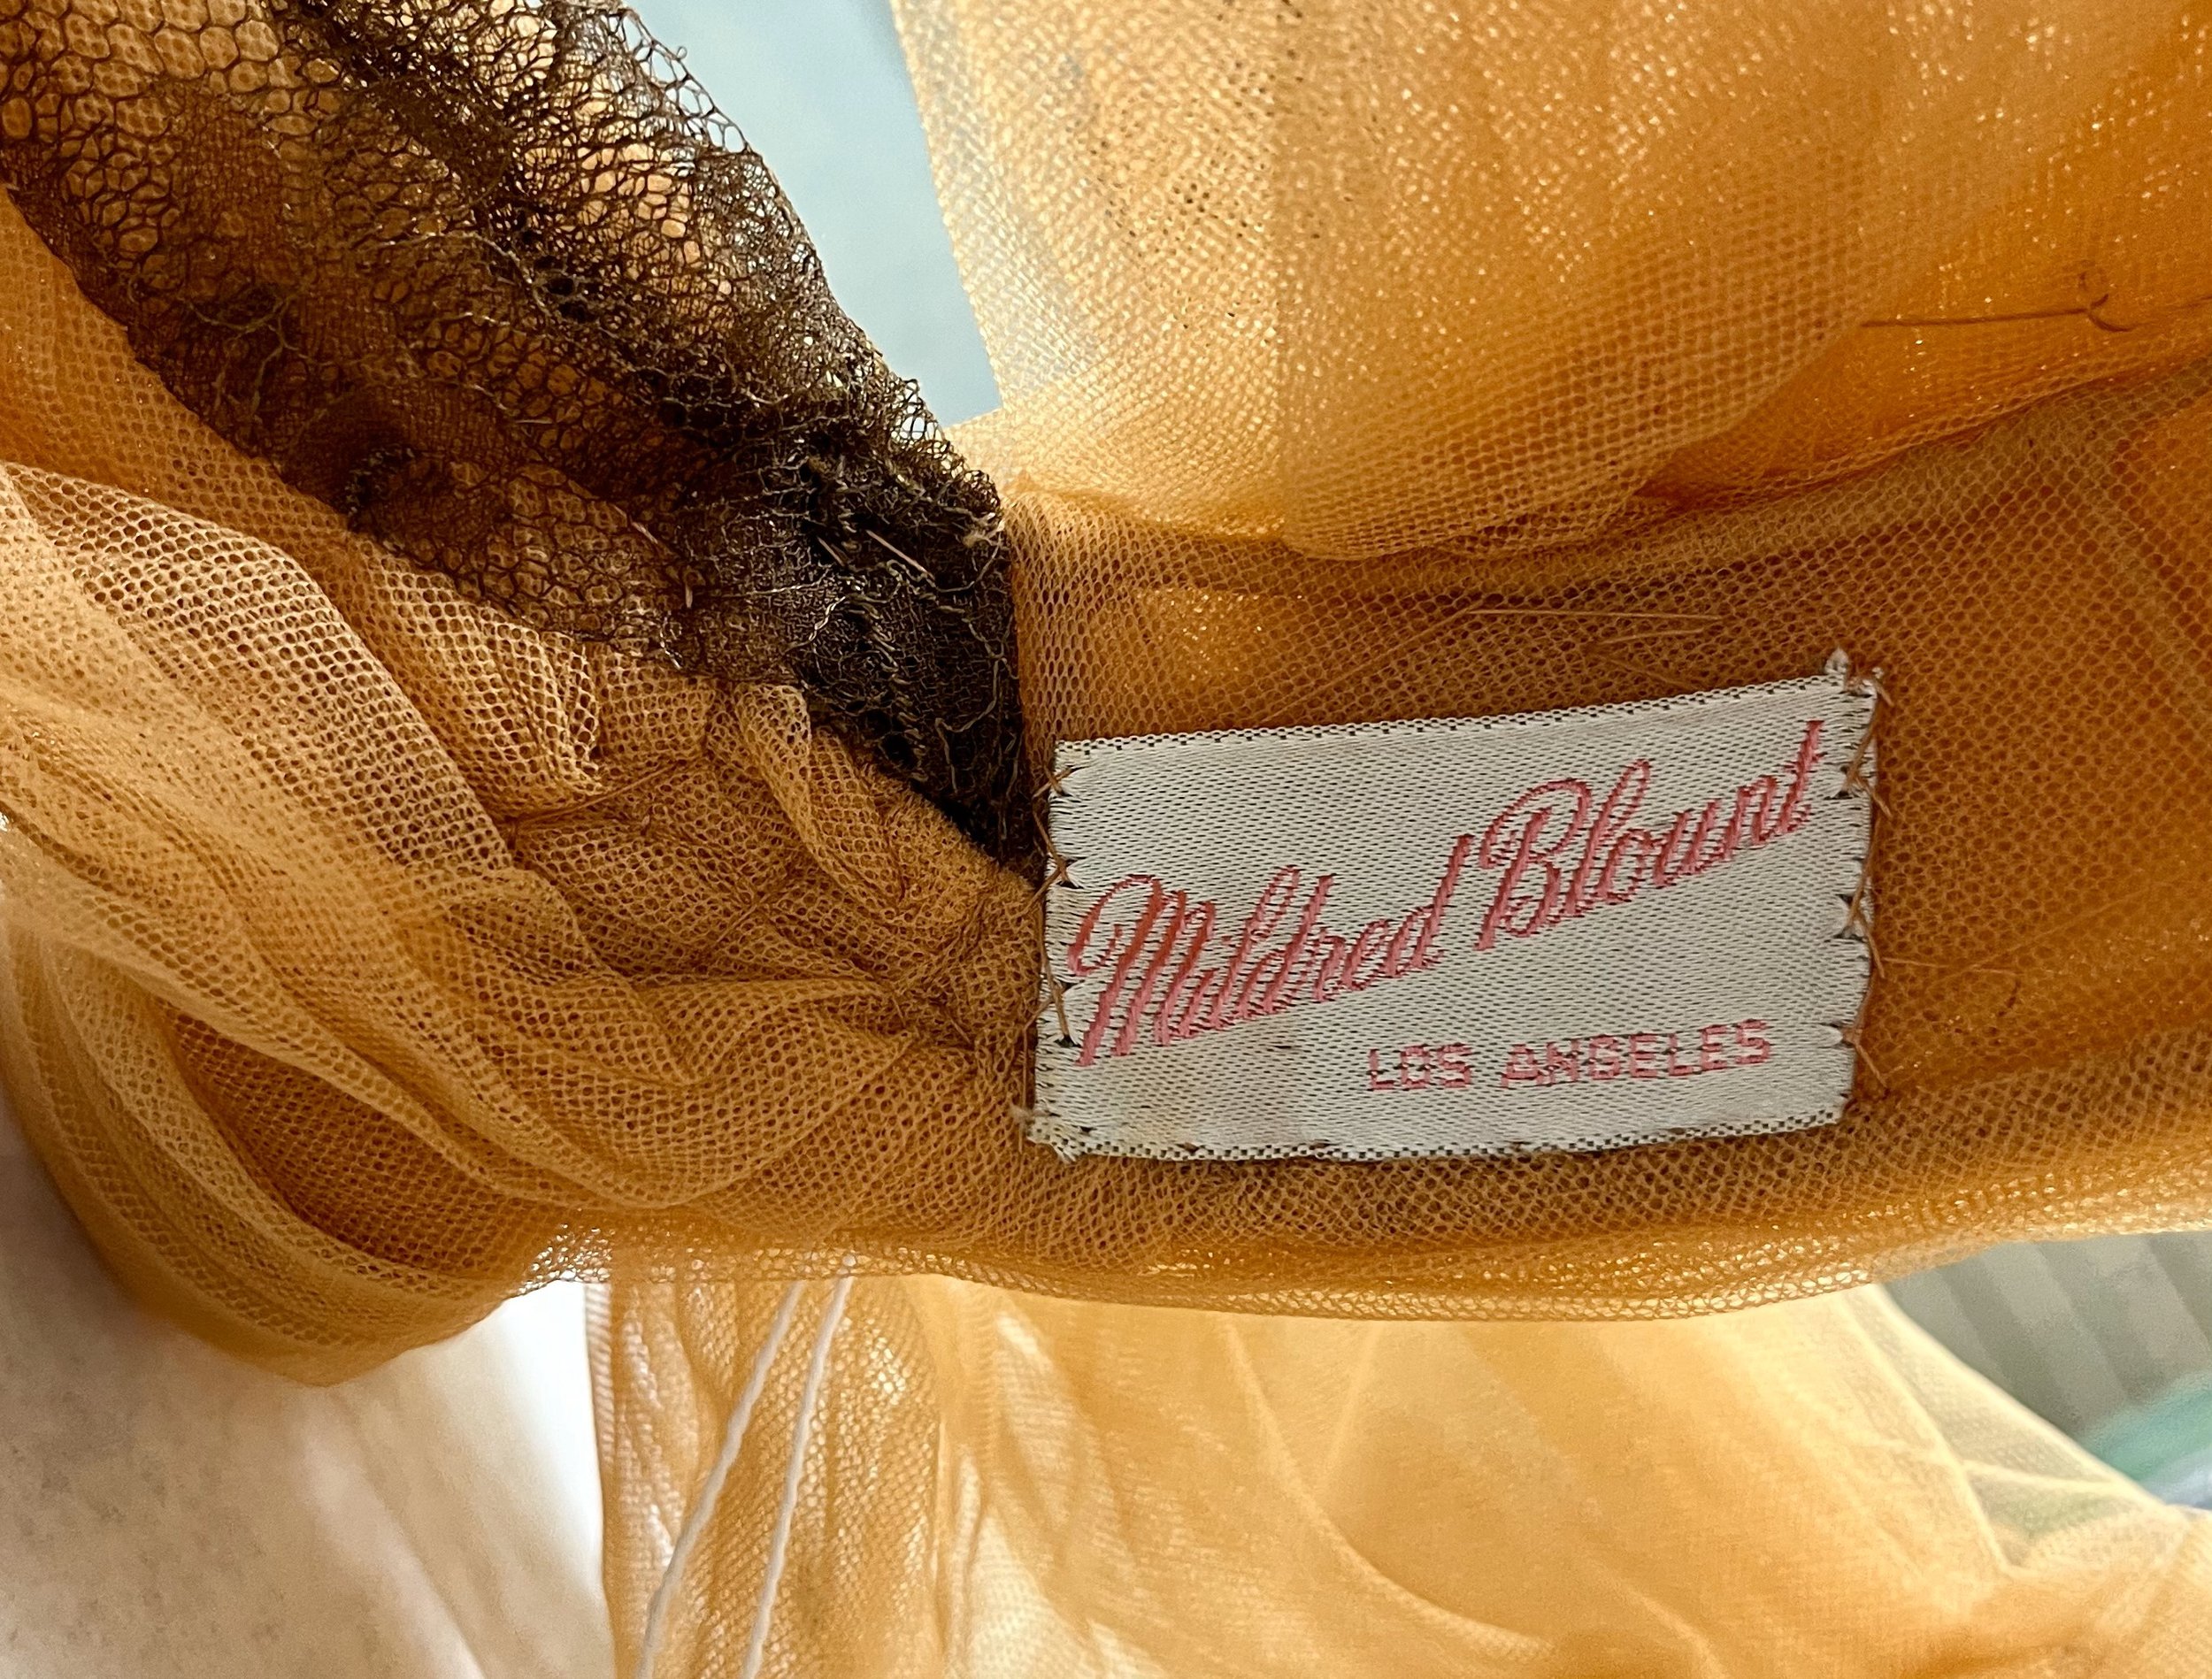 Mildred Blount Hat label